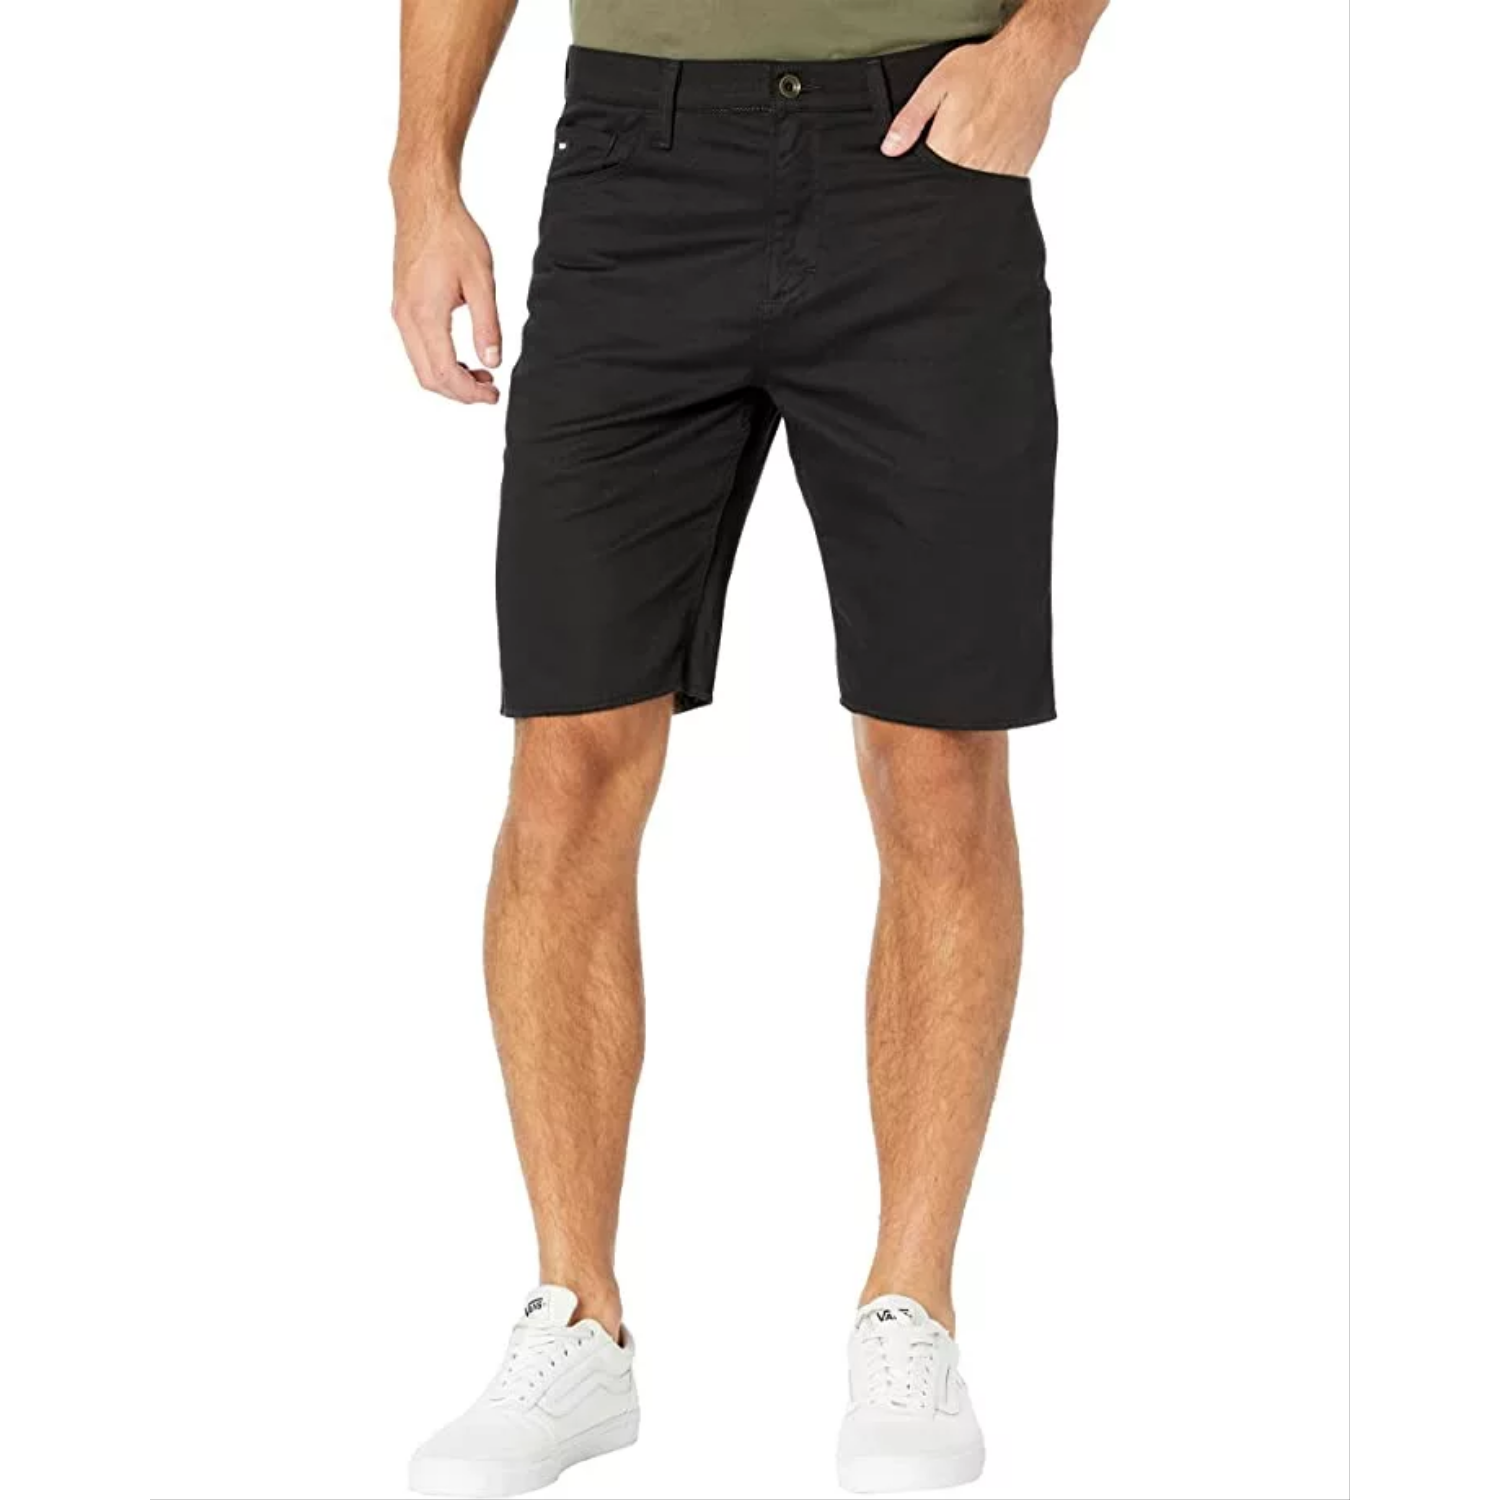 Shop Men\'s Shorts - - & Stylish Deals! Comfortable Great